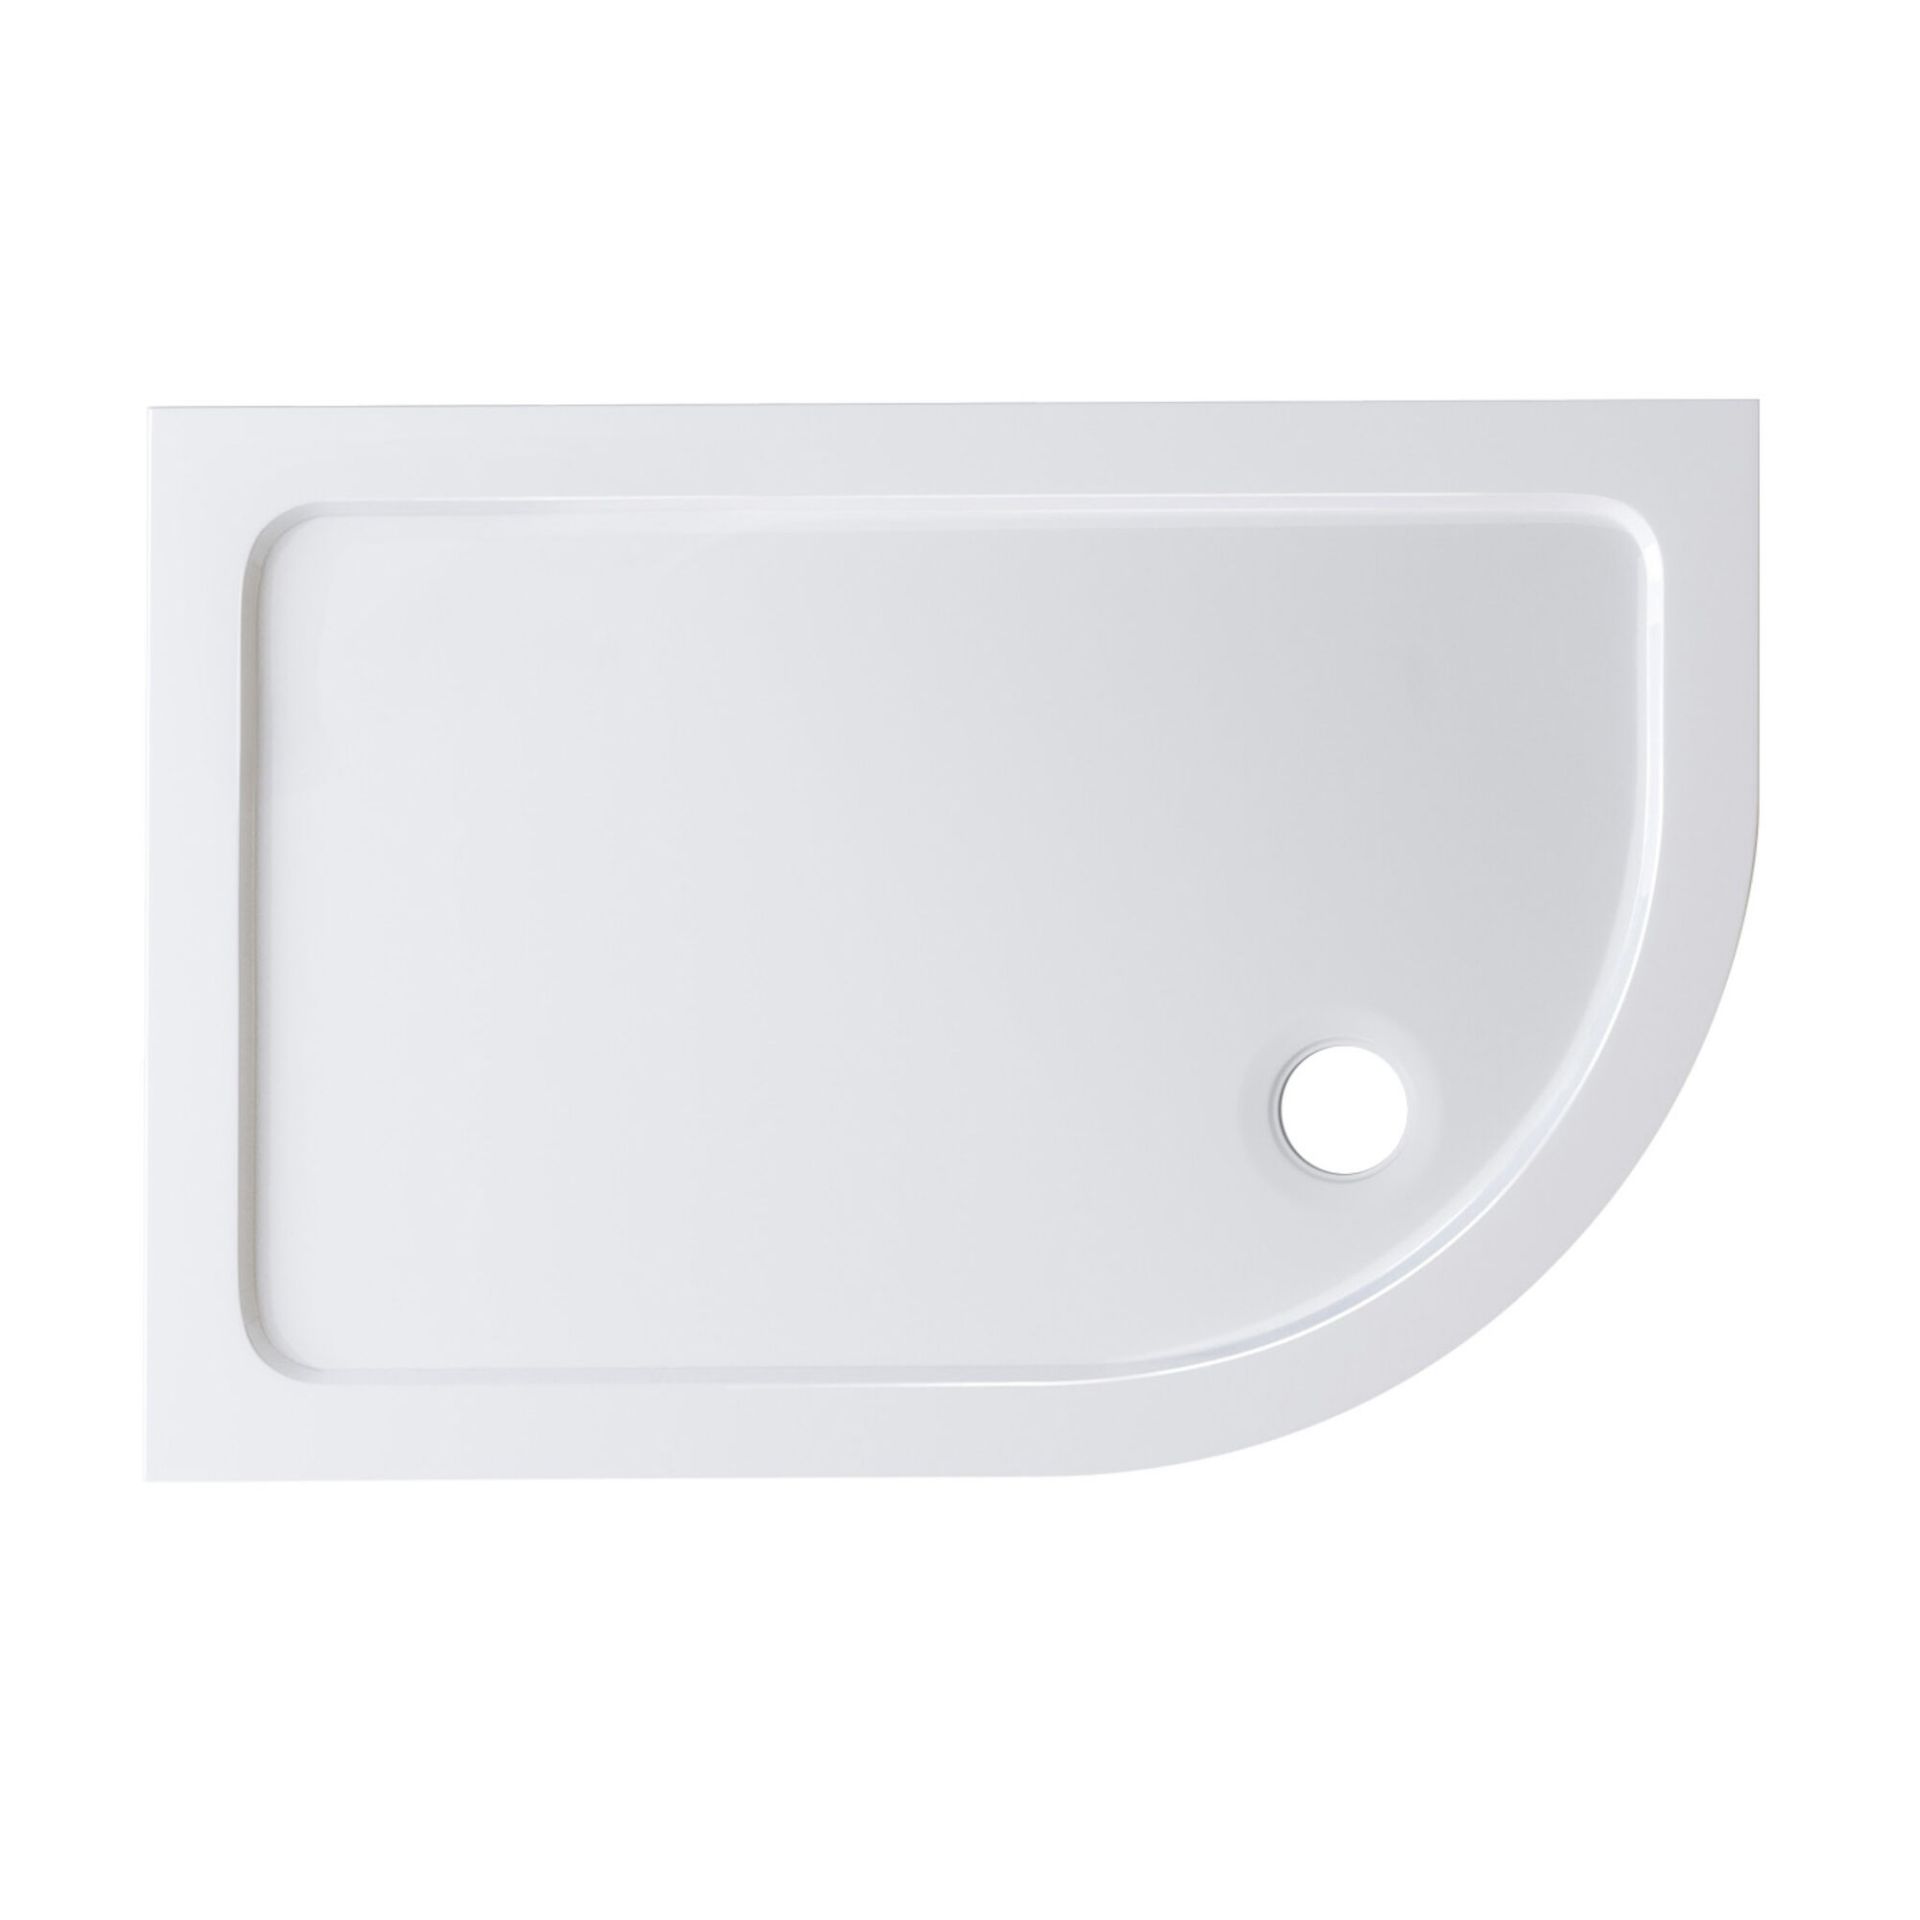 (QW106) 1200x800mm Offset Quadrant Ultra Slim Stone Shower Tray - Right. Low profile ultra      Slim